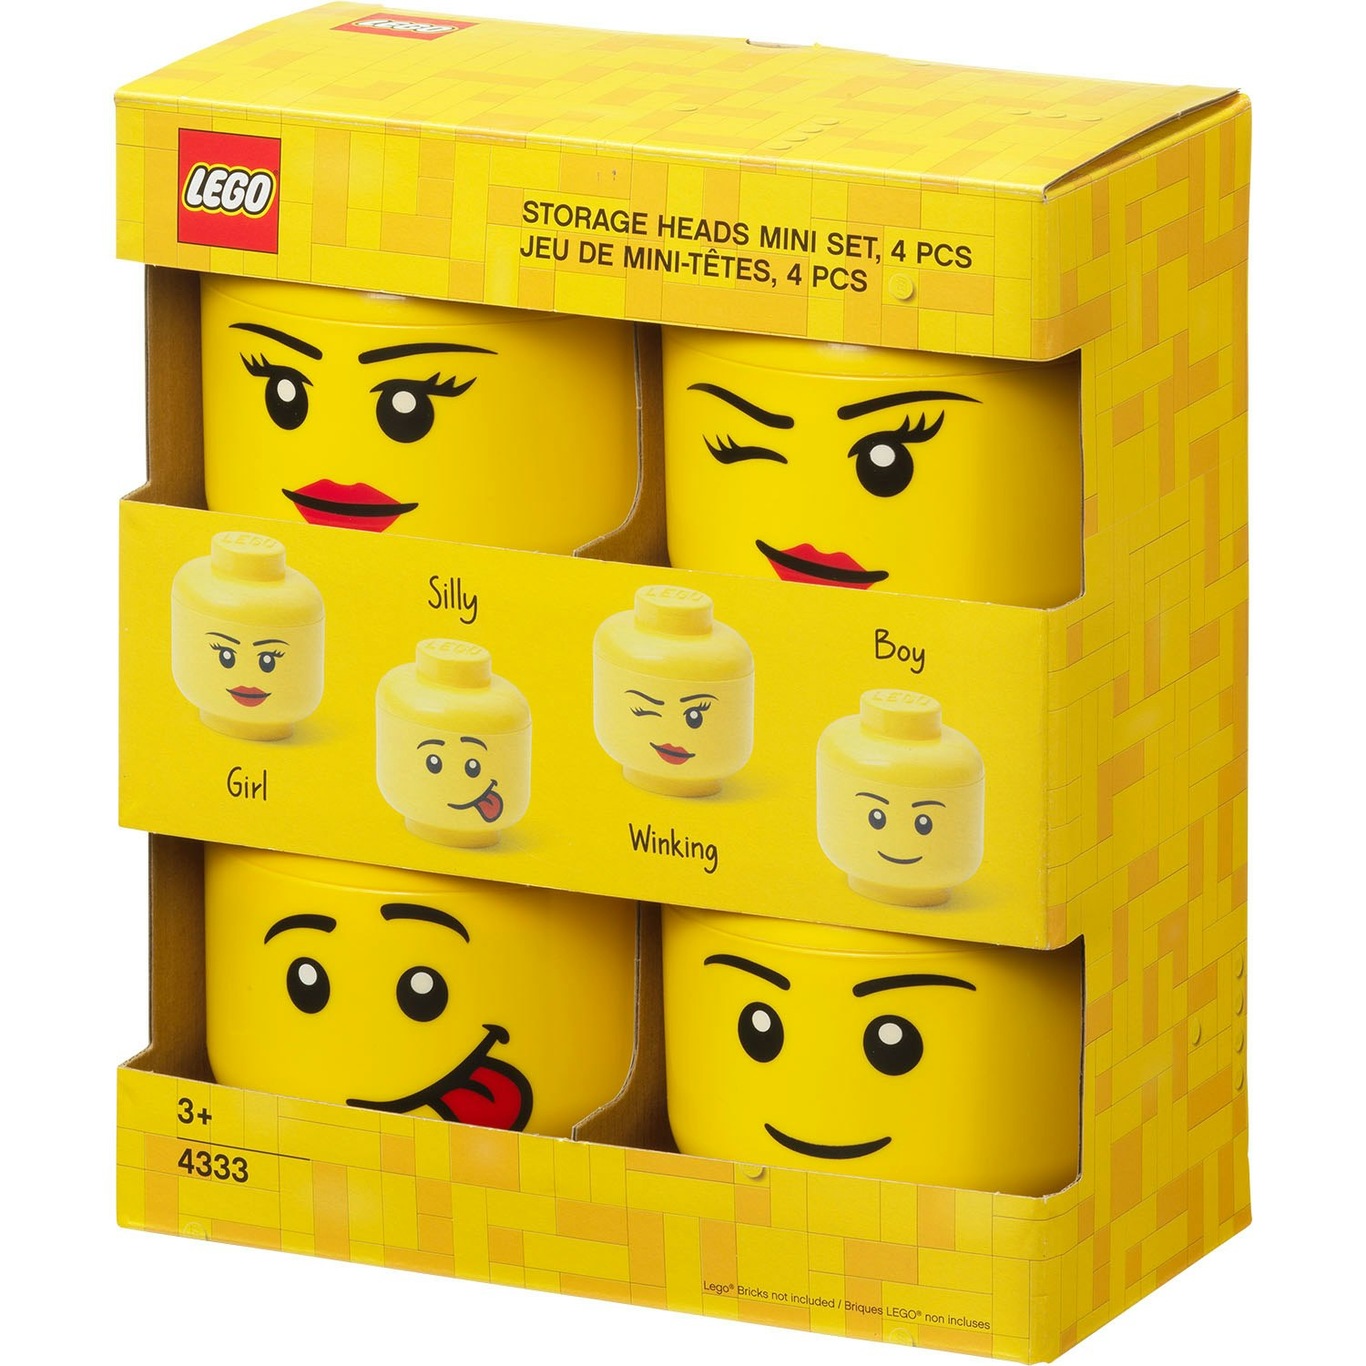 https://royaldesign.com/image/2/room-copenhagen-lego-storage-head-mini-set-4pcs-2?w=800&quality=80